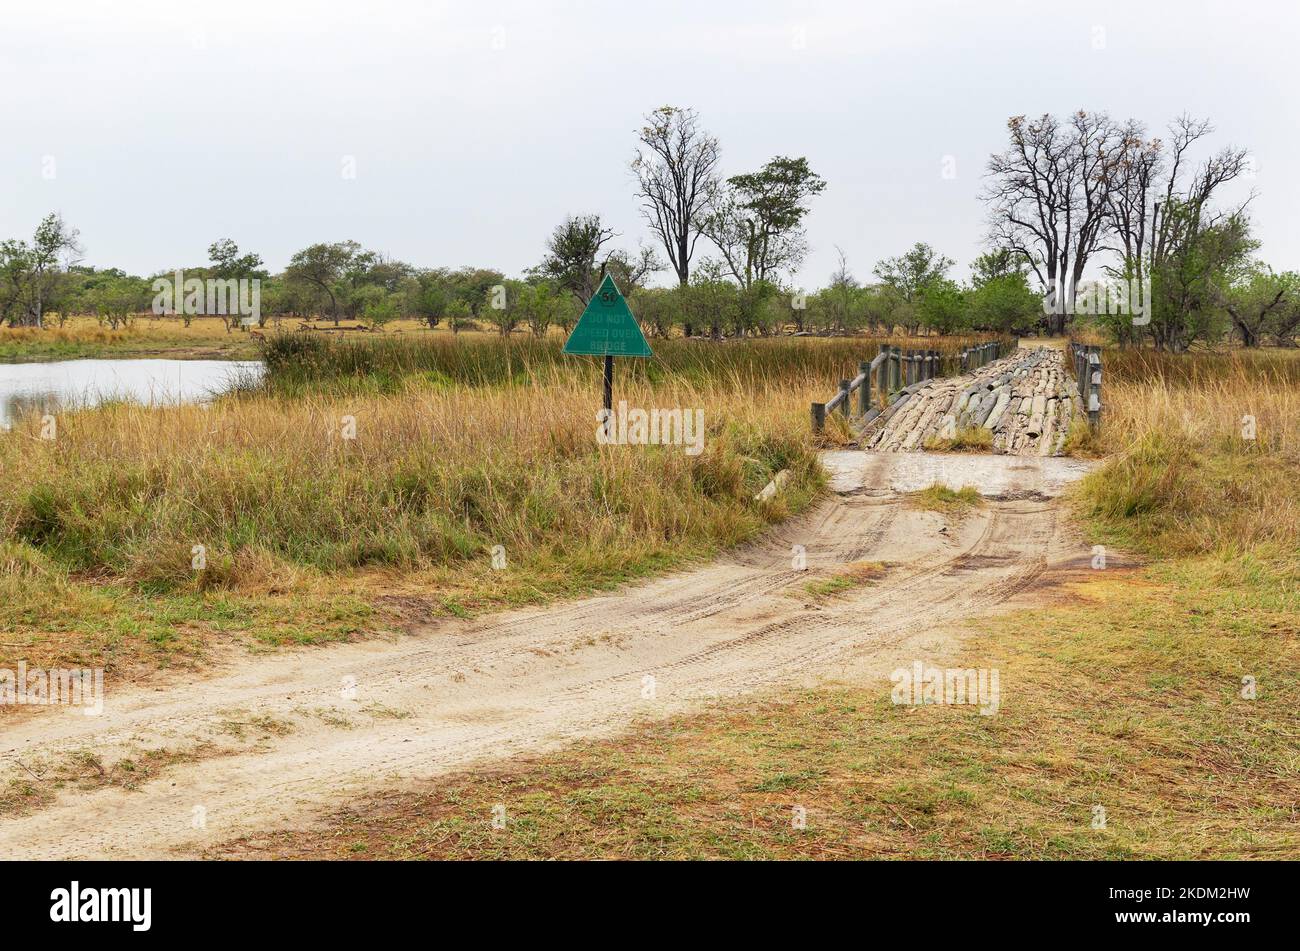 Third Bridge over water, Moremi Game Reserve landscape, Okavango Delta, Botswana Africa Stock Photo